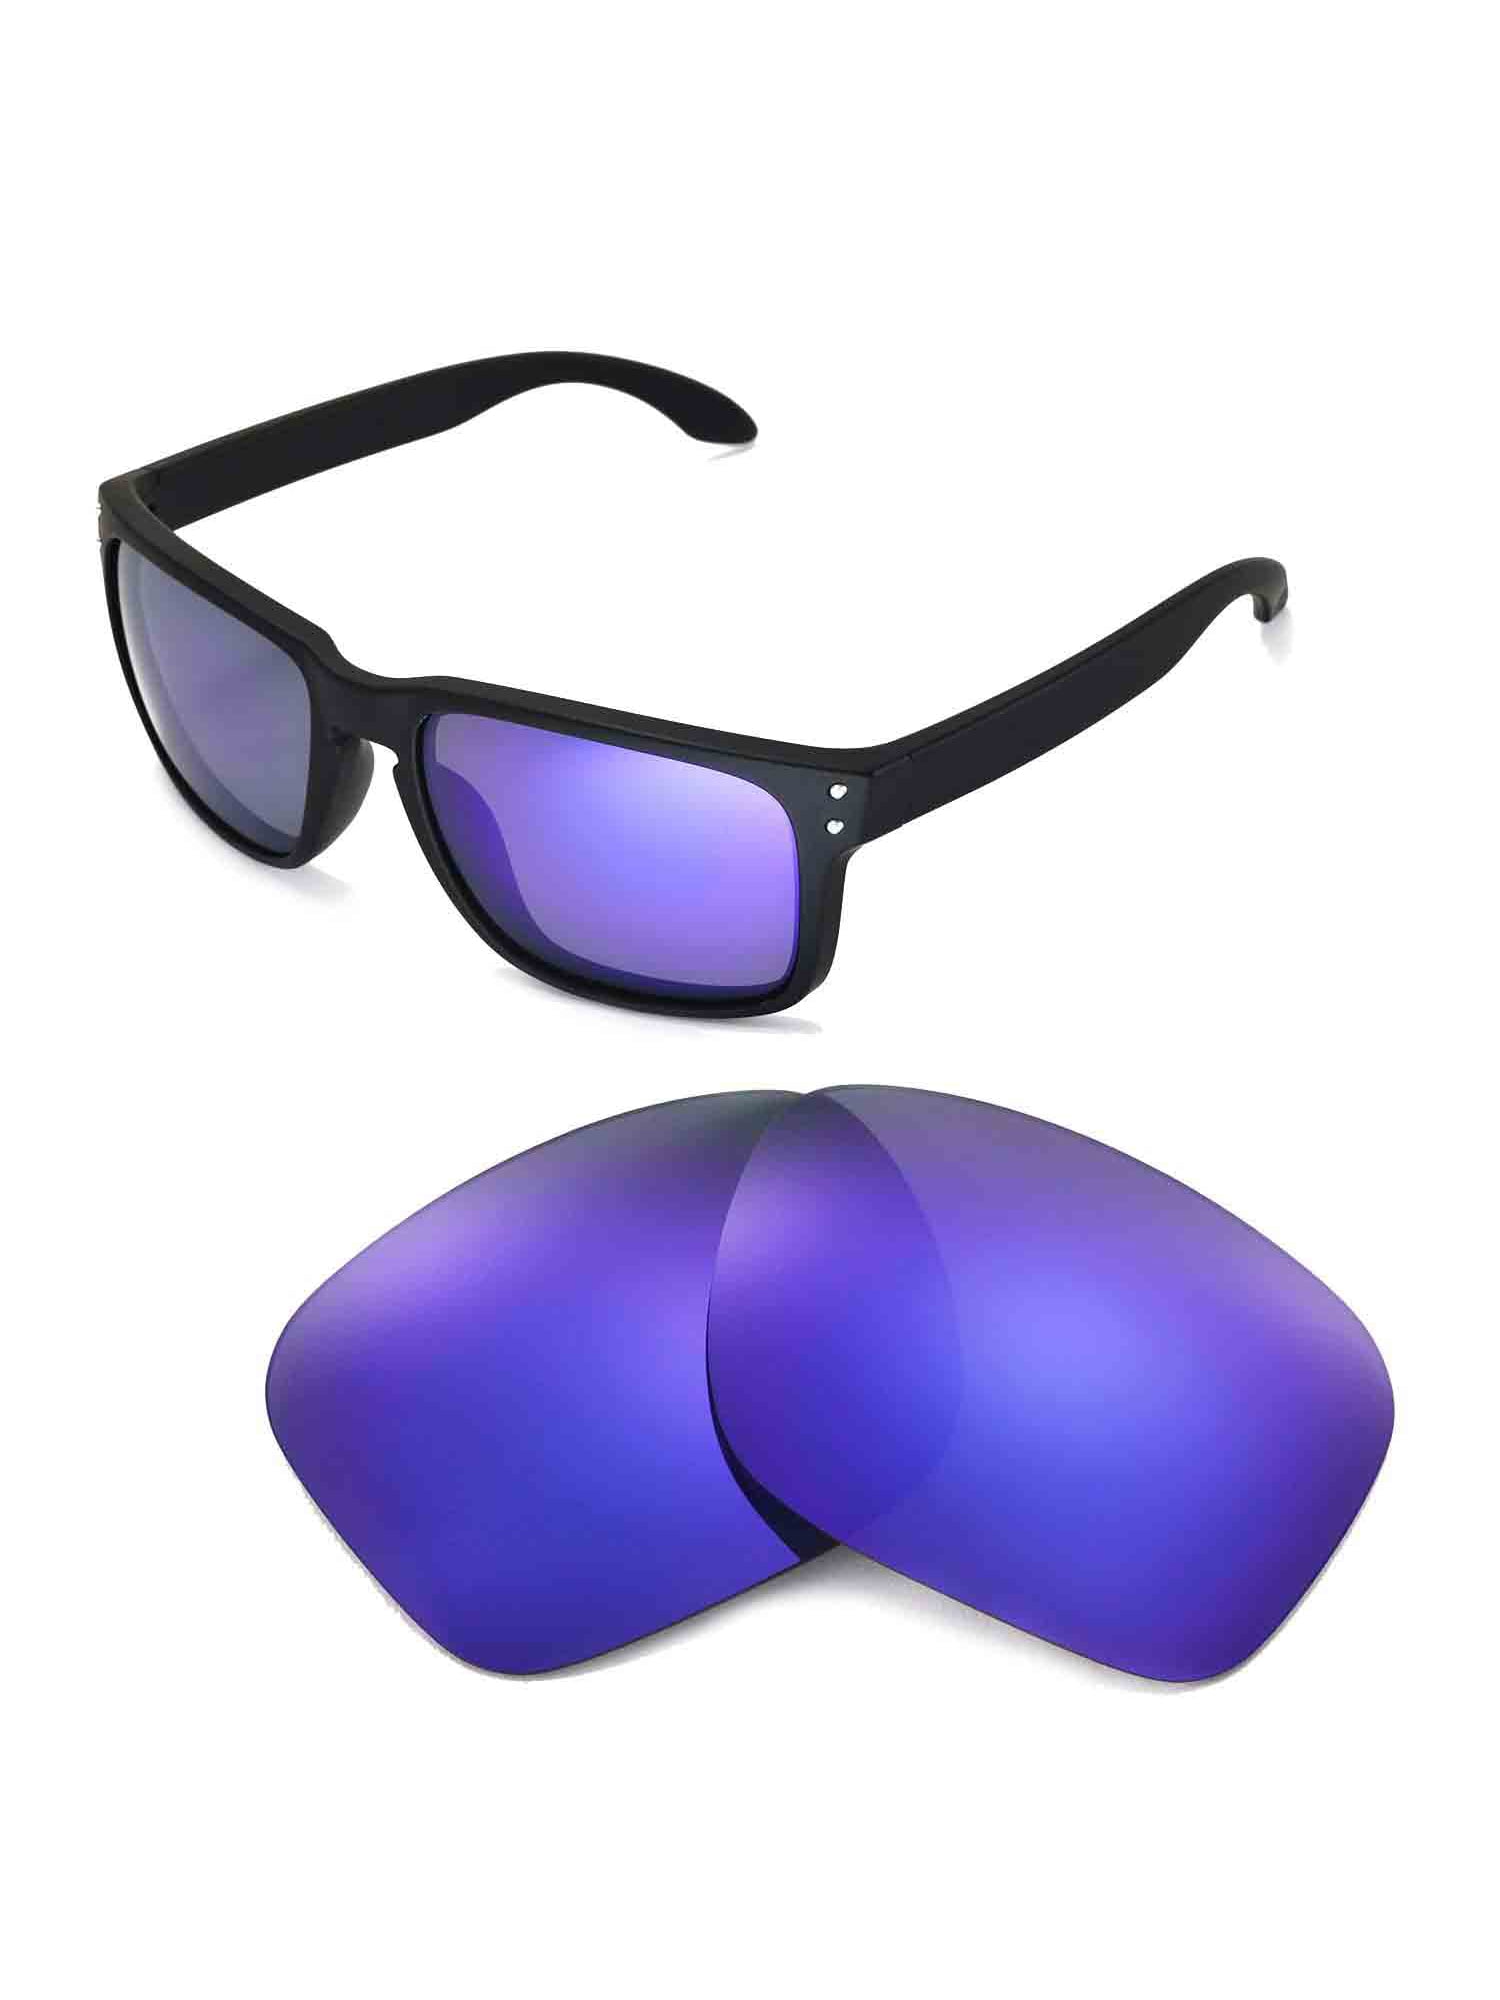 oakley sunglasses purple